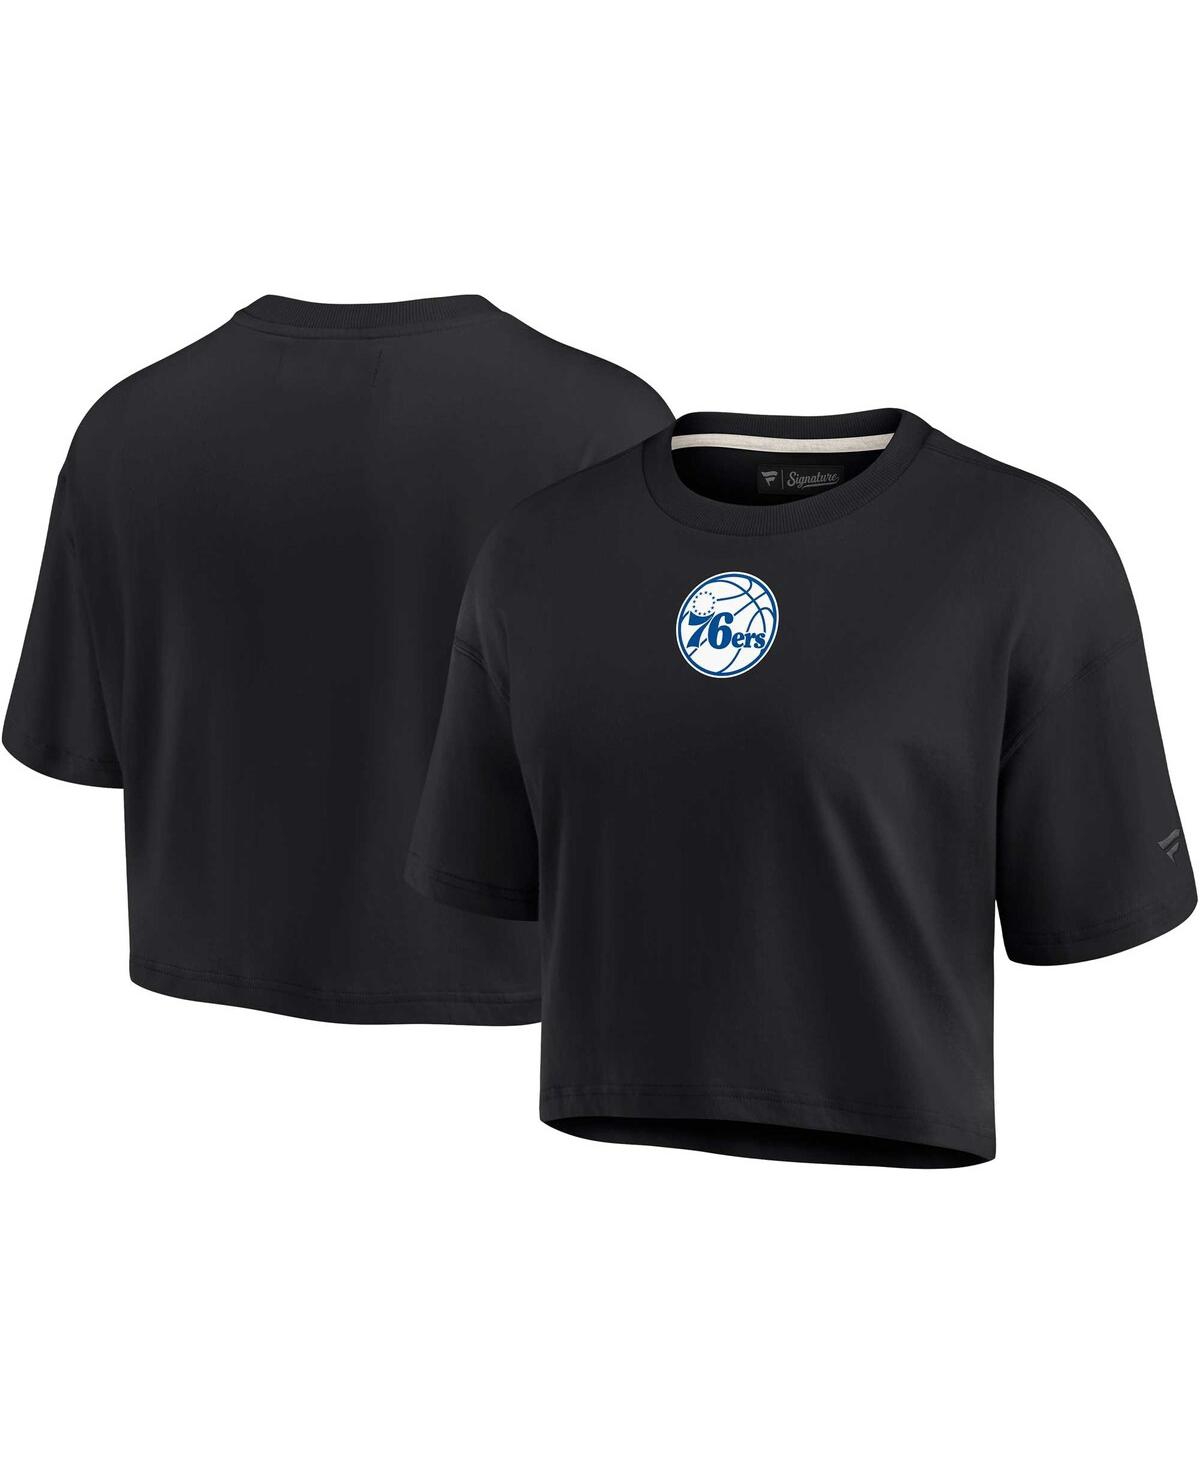 Women's Fanatics Signature Black Philadelphia 76ers Super Soft Boxy Cropped T-shirt - Black